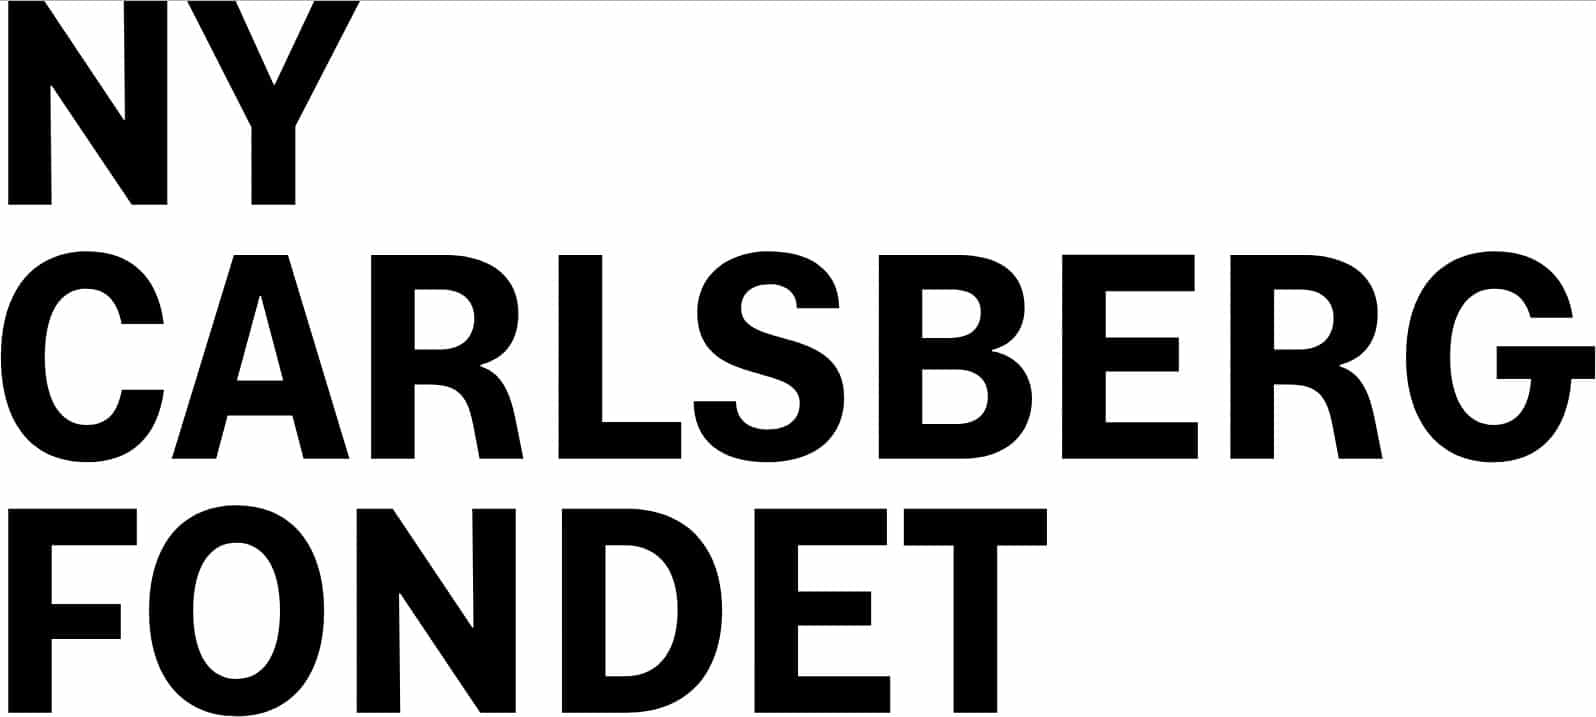 Ny Carlsberg fondet Logo